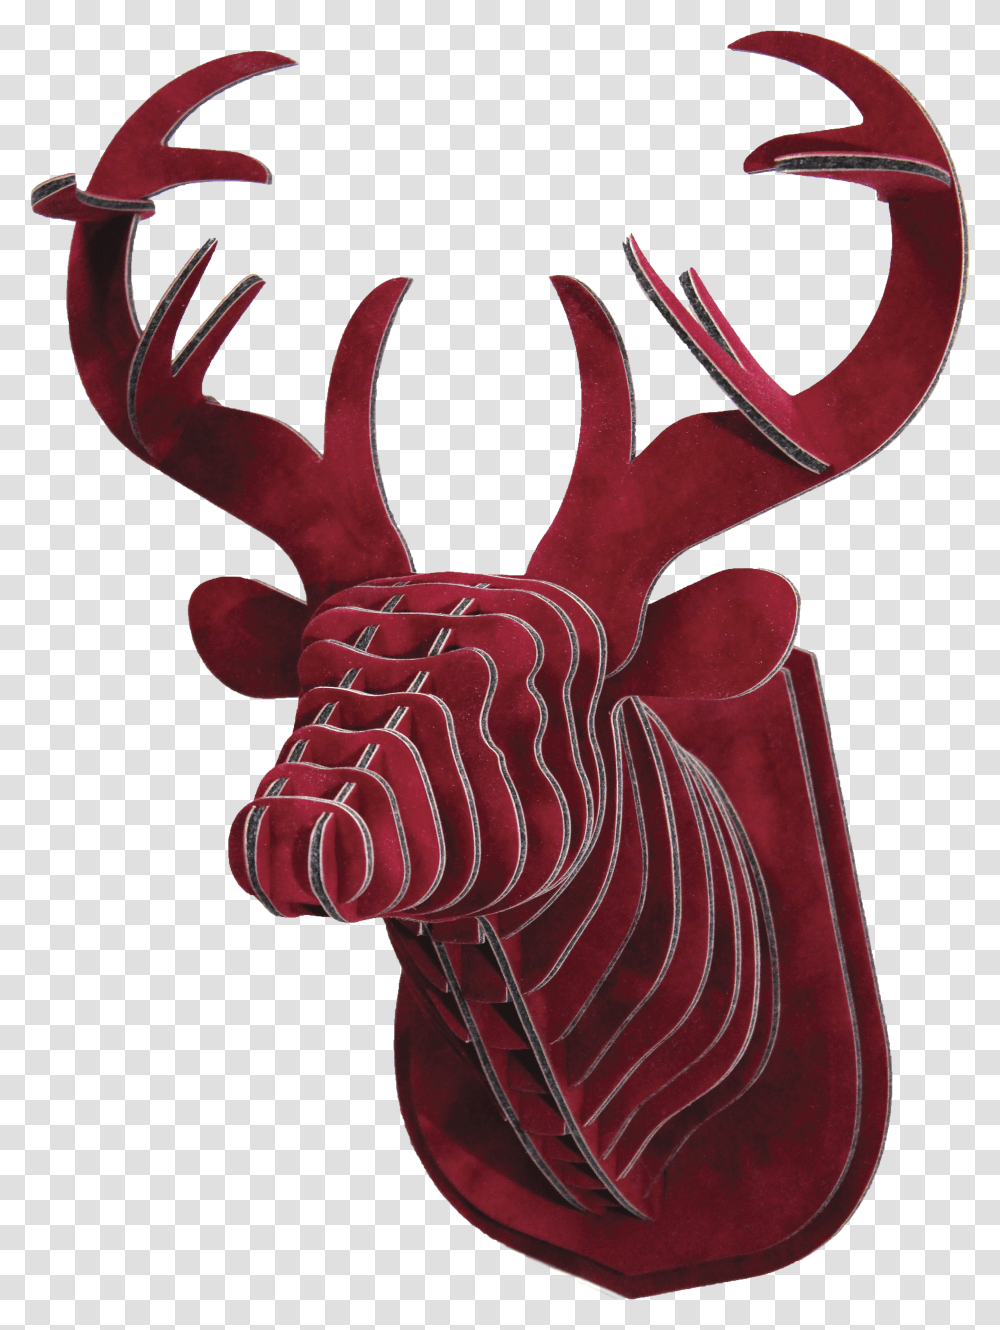 Head Of Kvk Deer Velvet Bordeaux Vip To Illustration Transparent Png